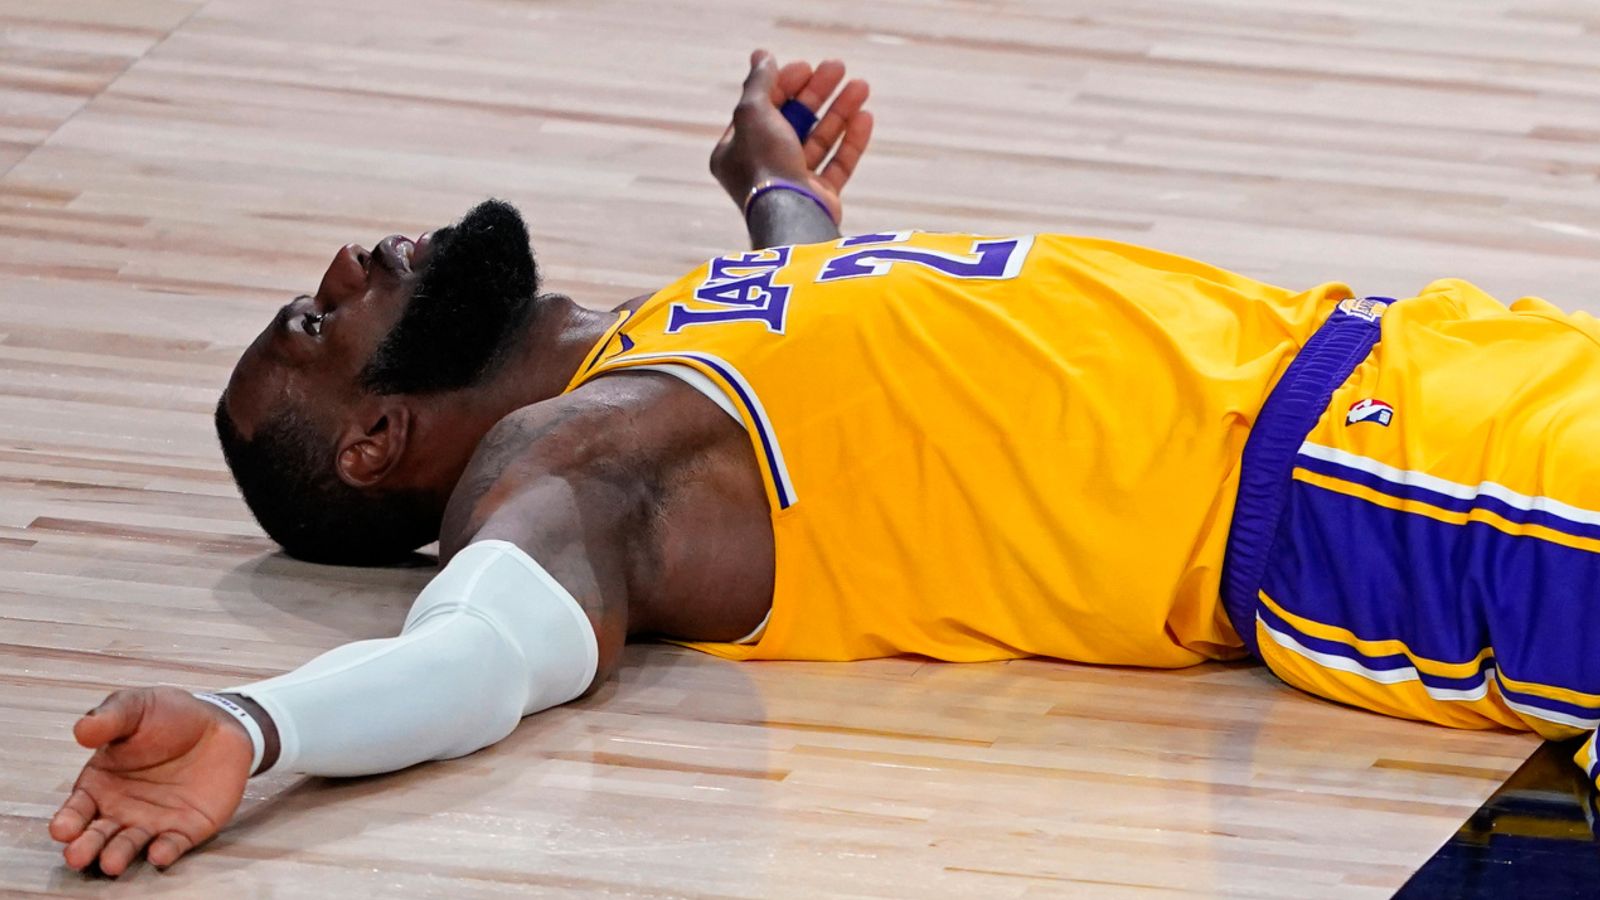 Lakers lose in Atlanta as LeBron gets knee examined in LA